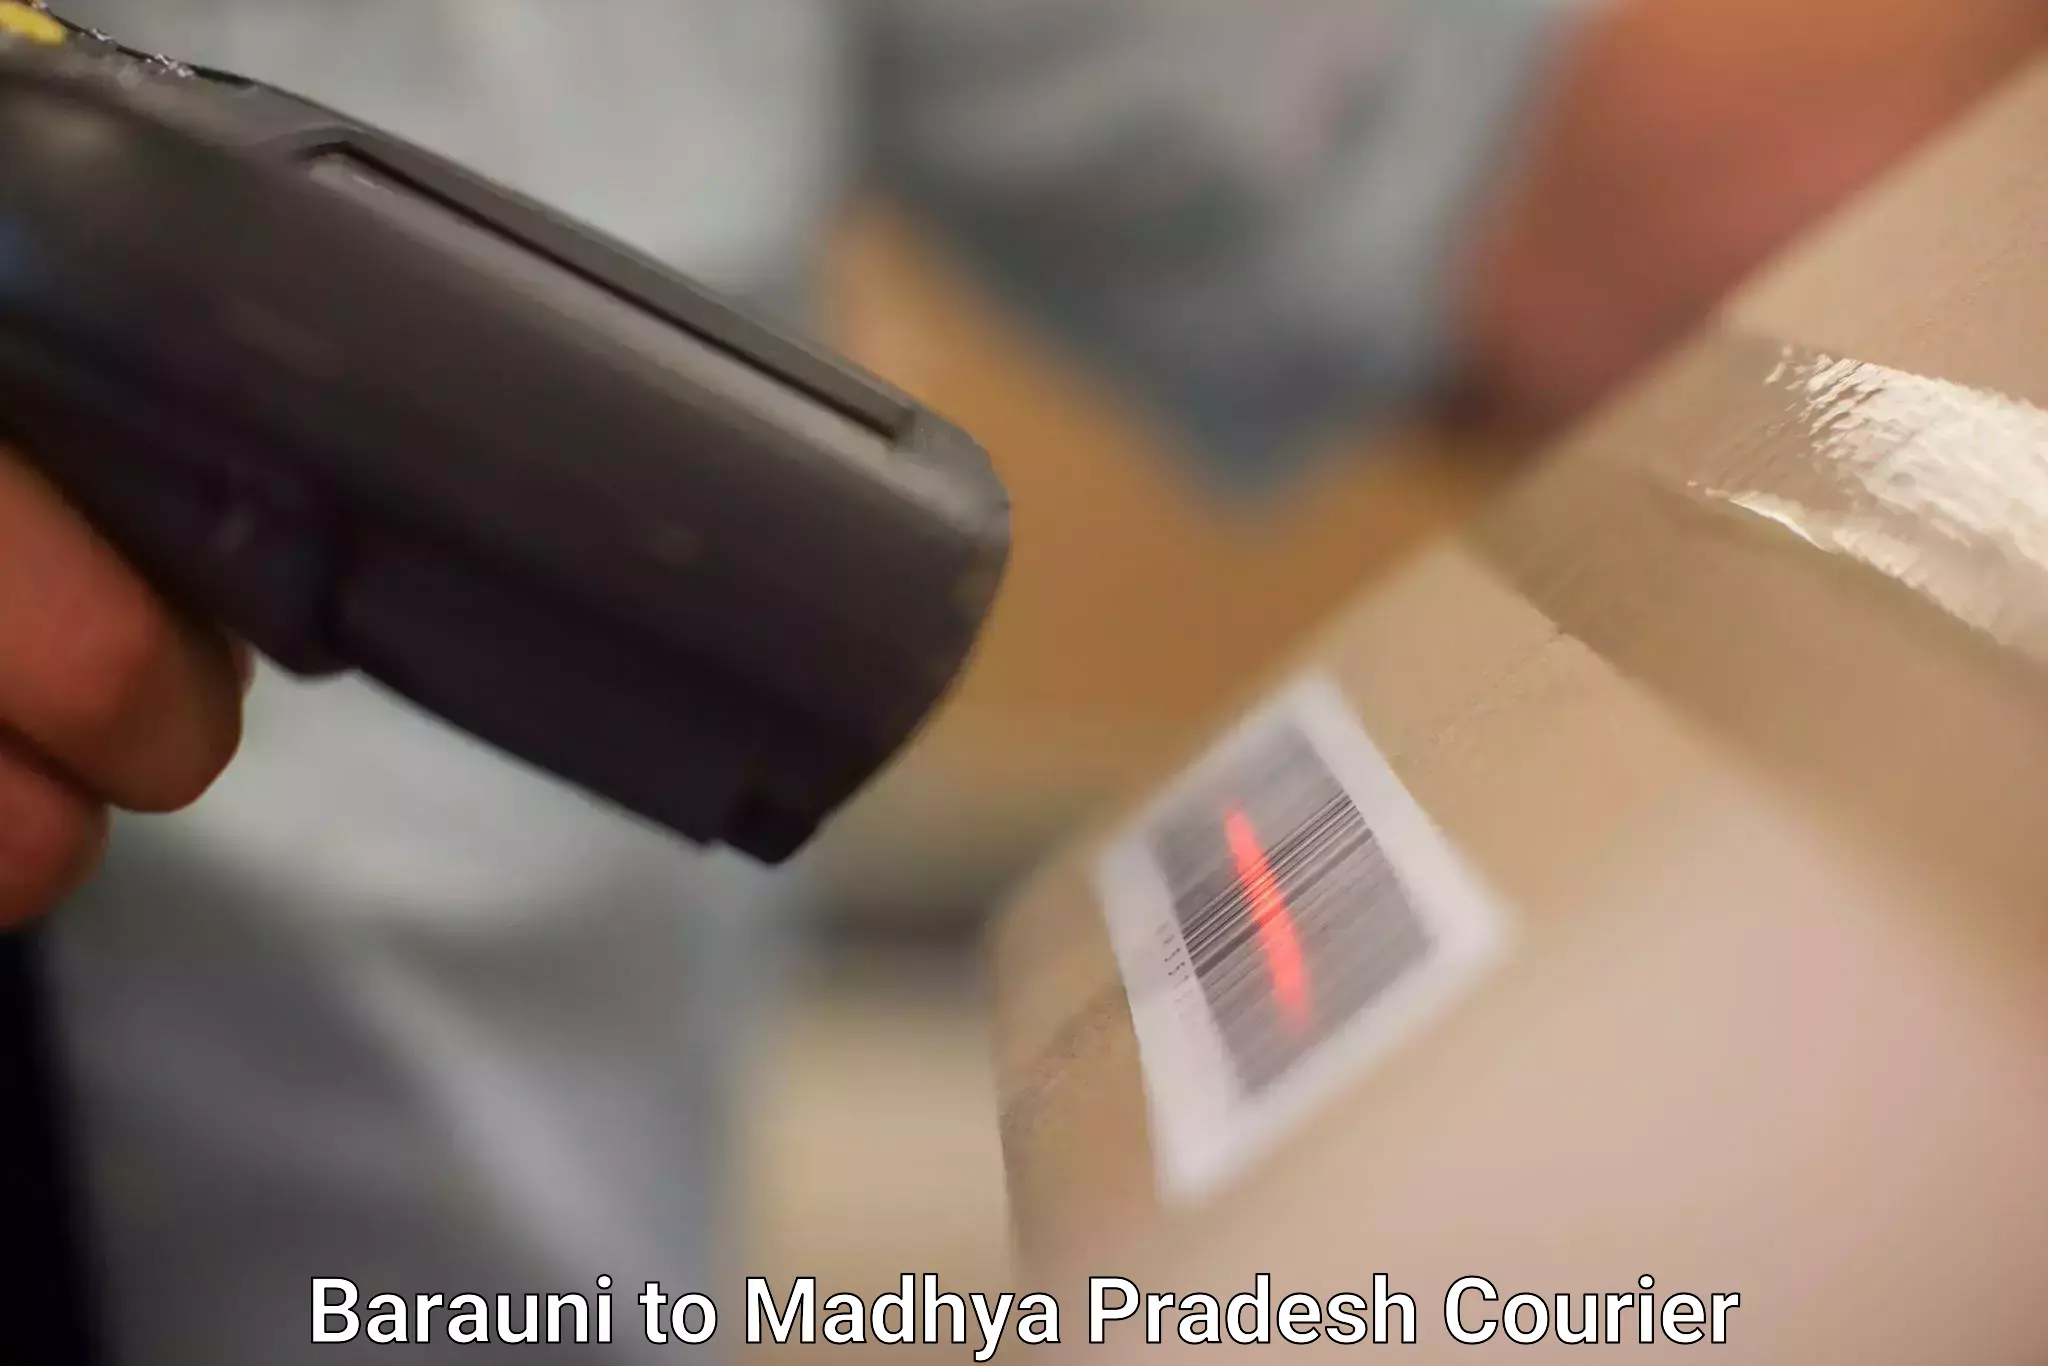 Courier service comparison Barauni to Madhya Pradesh